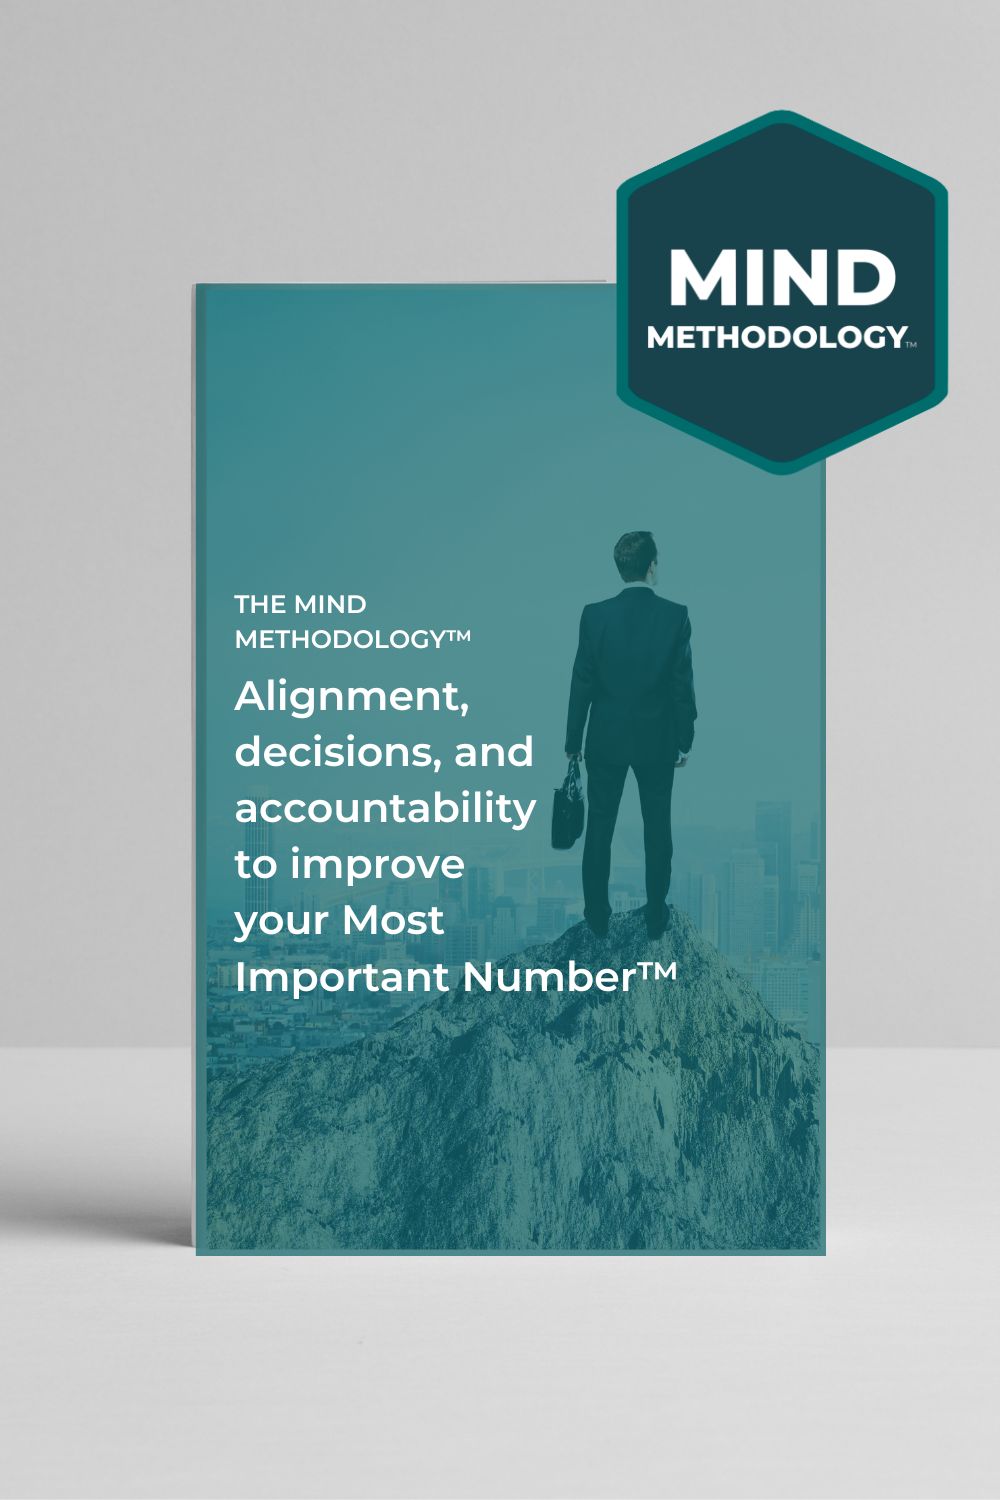 Download FREE Mind Methodology Playbook